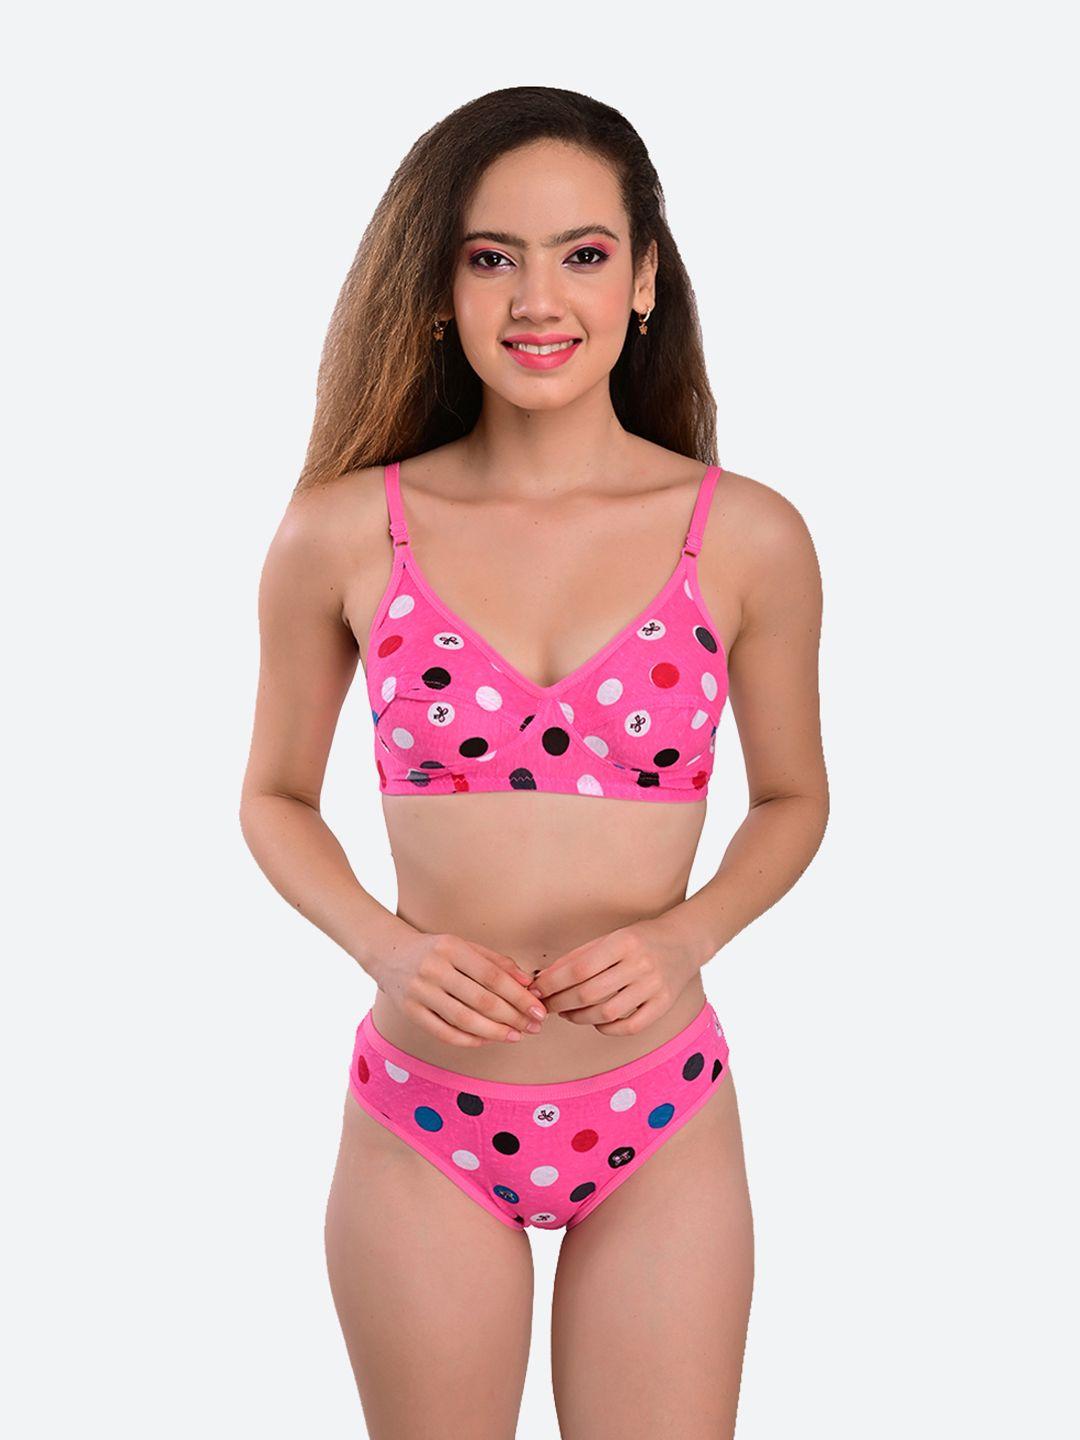 fleurt pink & white polka dot printed cotton lingerie set